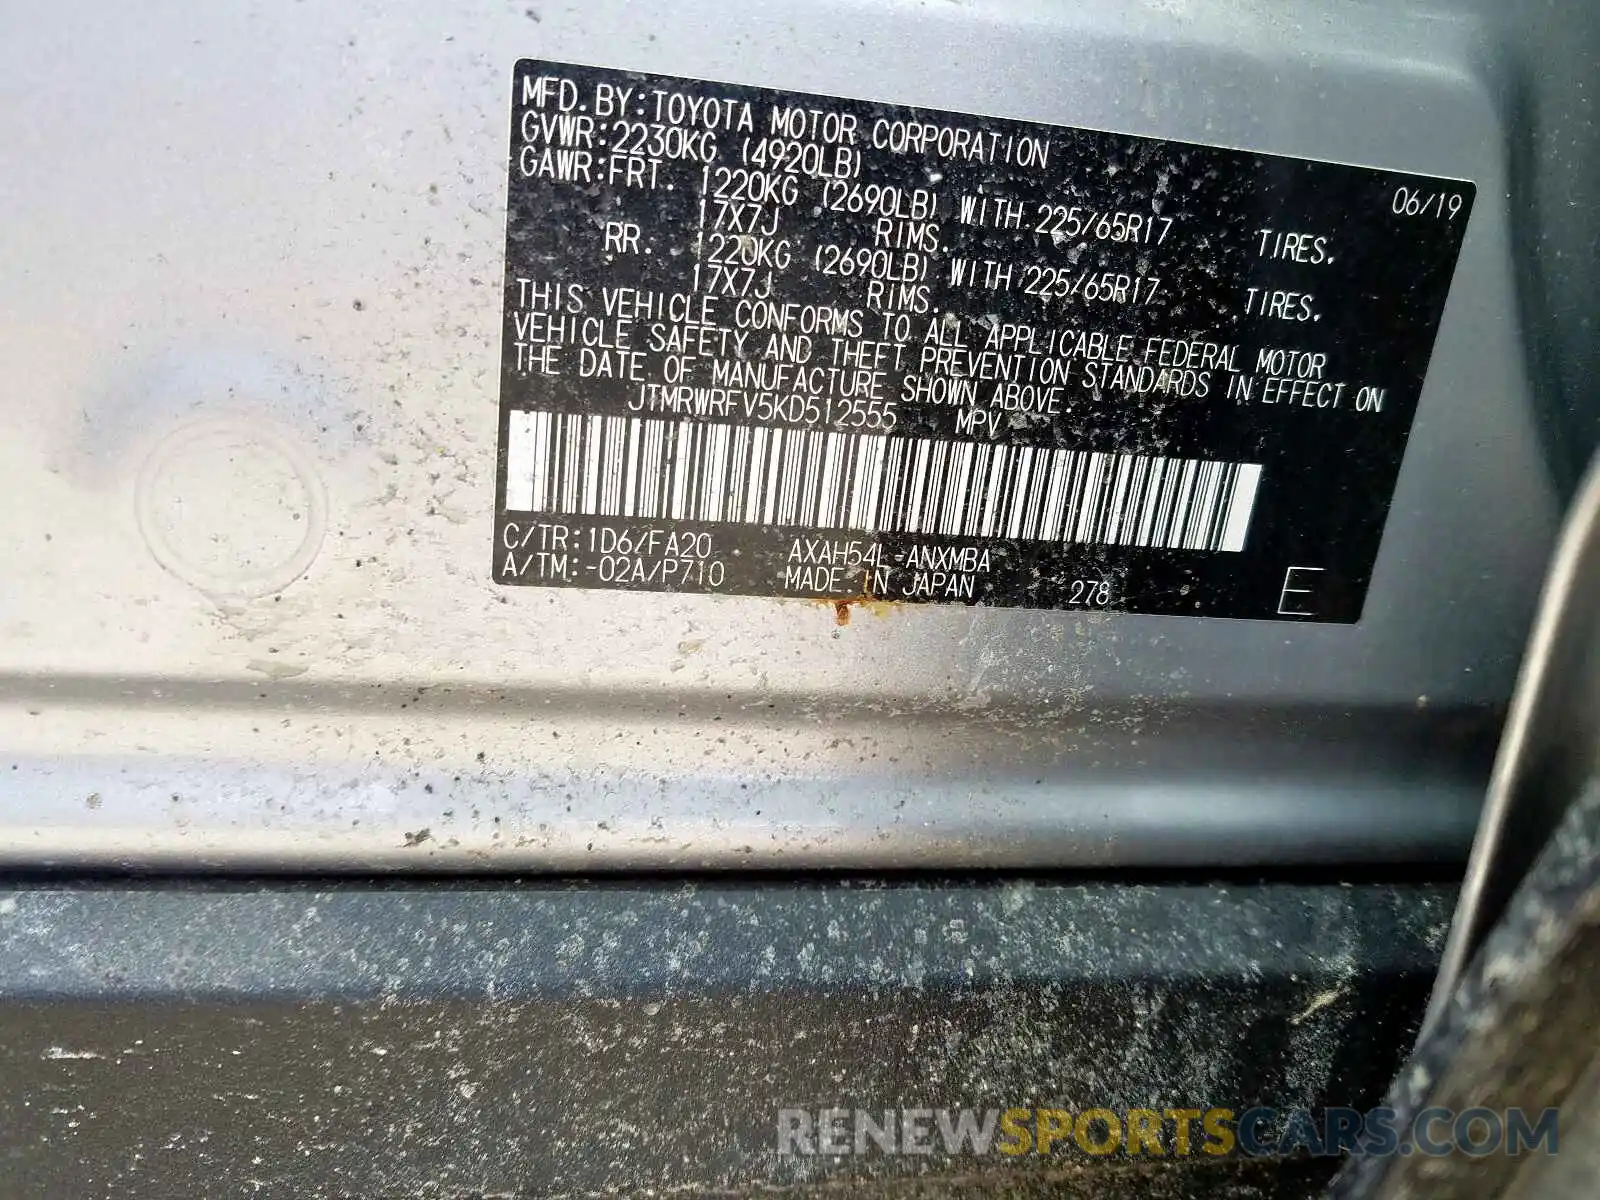 10 Photograph of a damaged car JTMRWRFV5KD512555 TOYOTA RAV4 2019